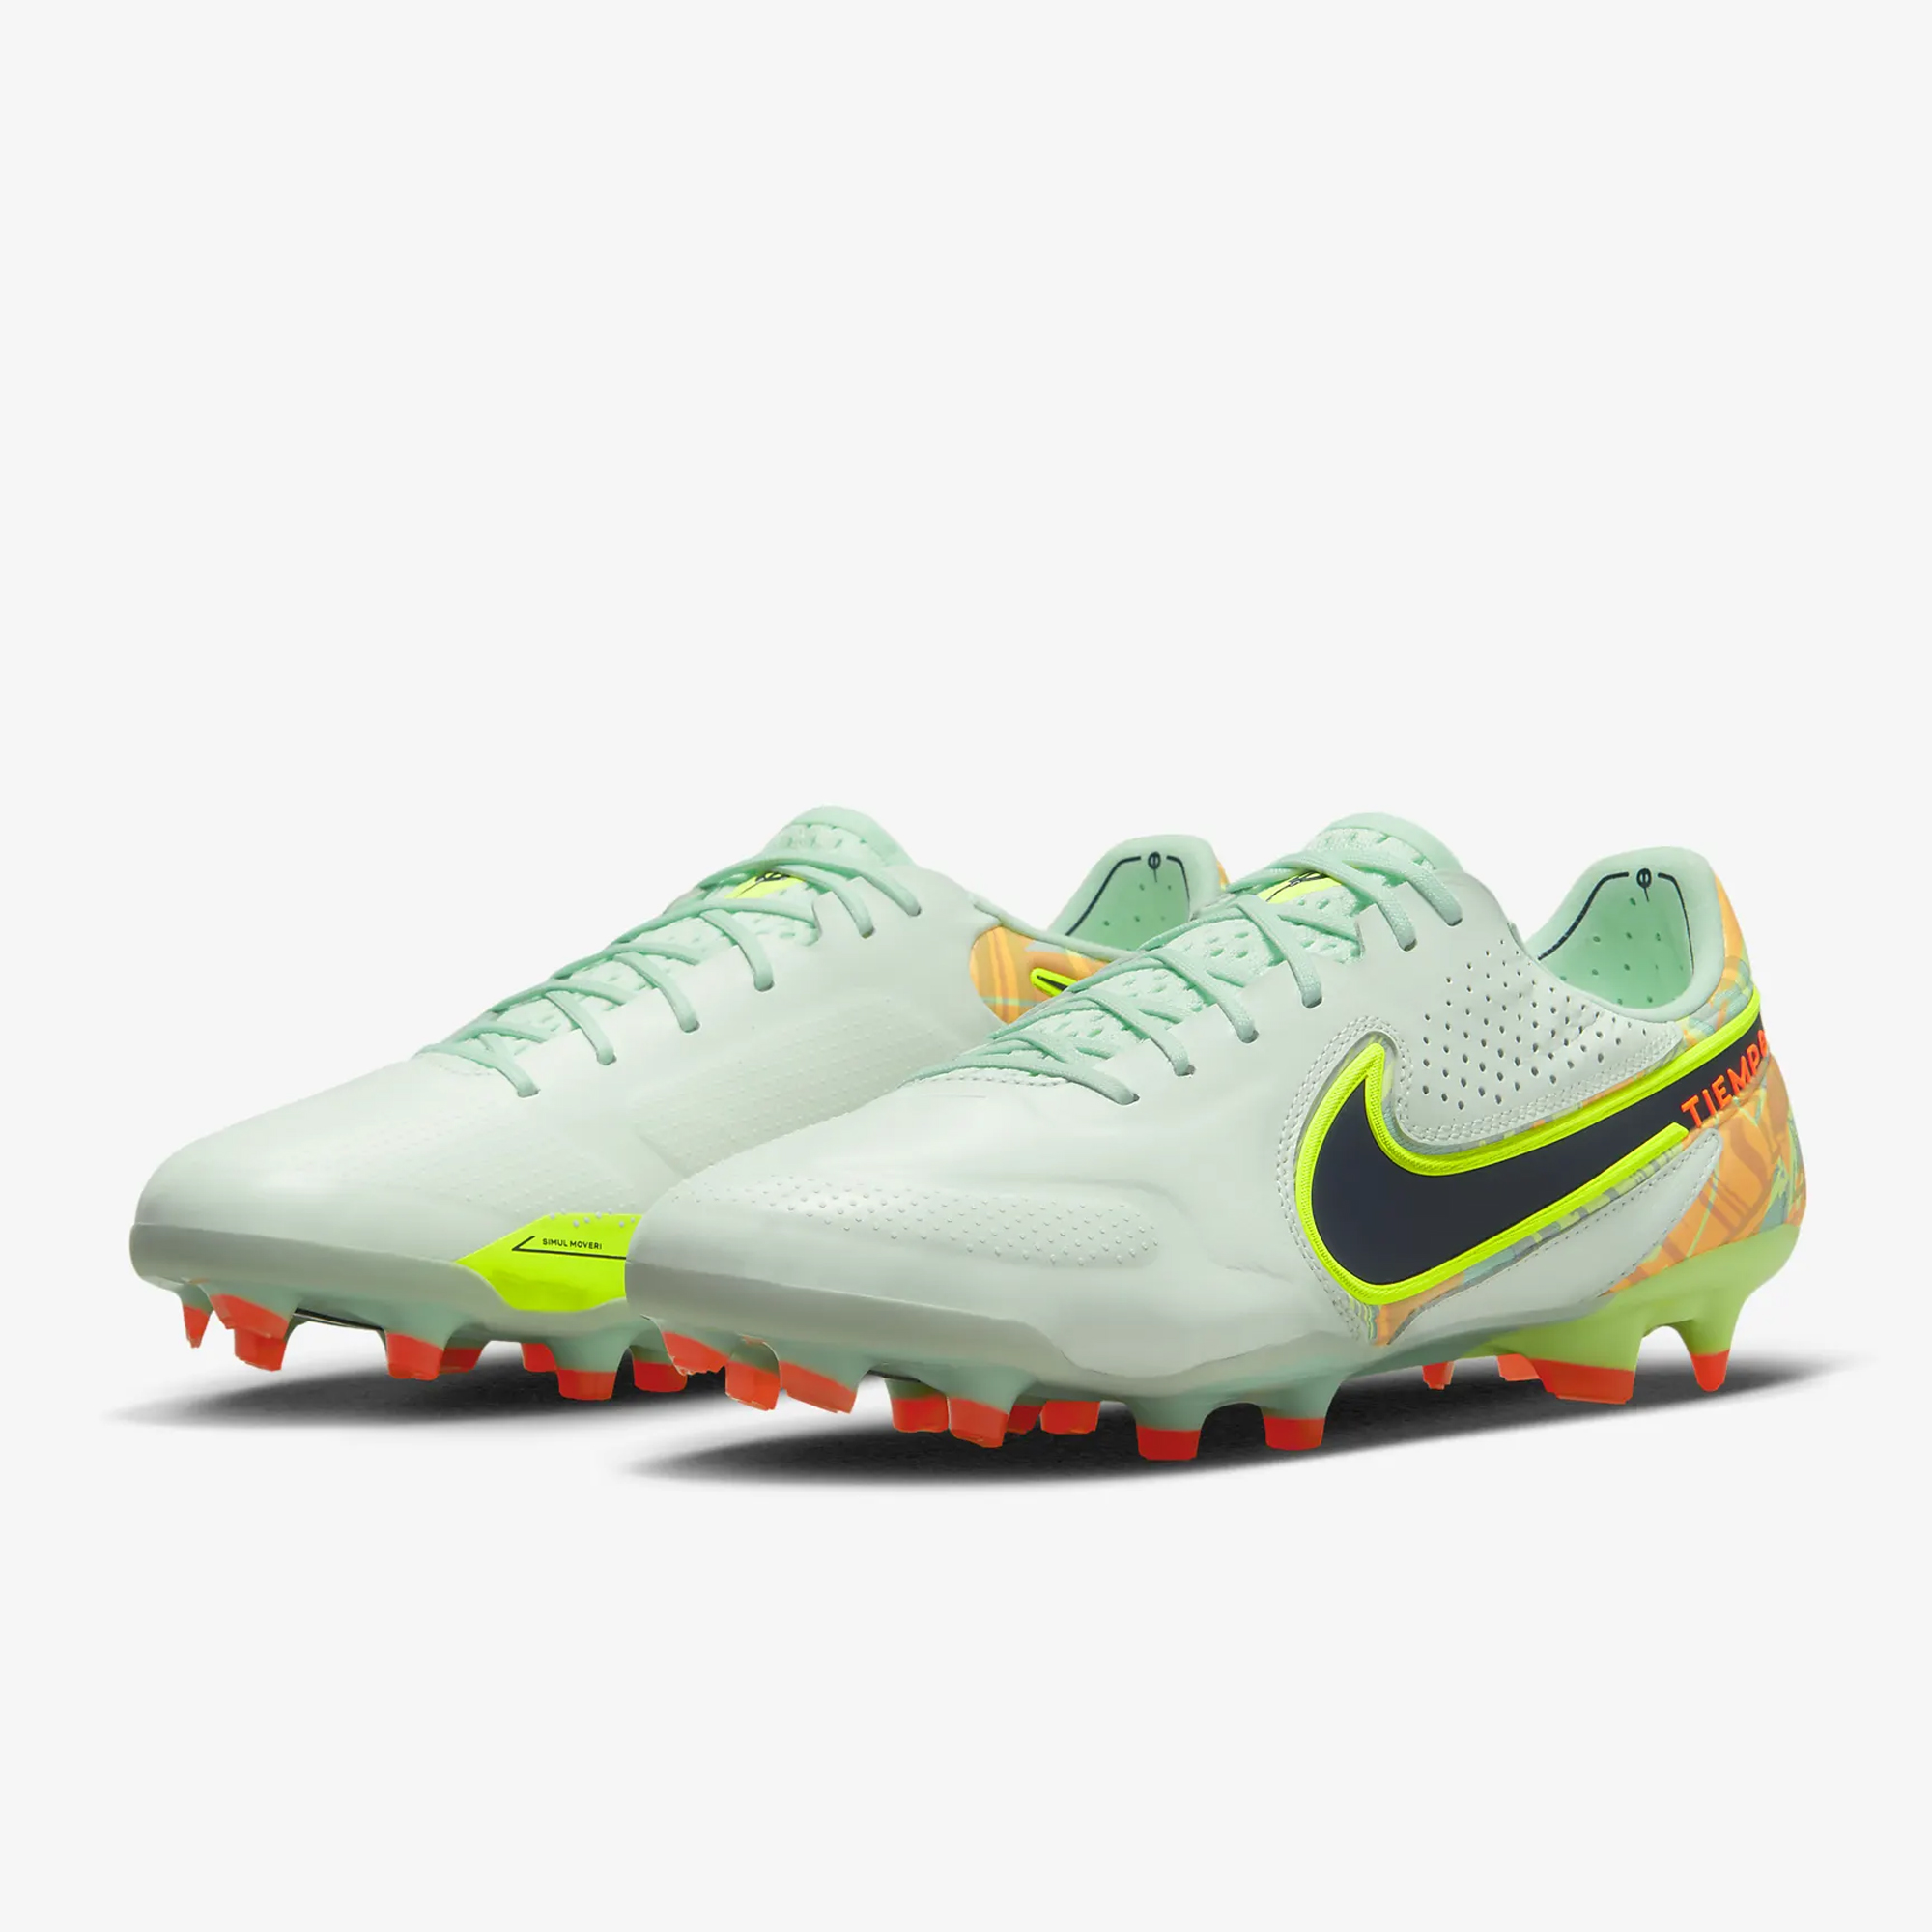 stefanssoccer.com:Nike Tiempo 9 Elite Firm Ground Soccer Cleats - Light Green